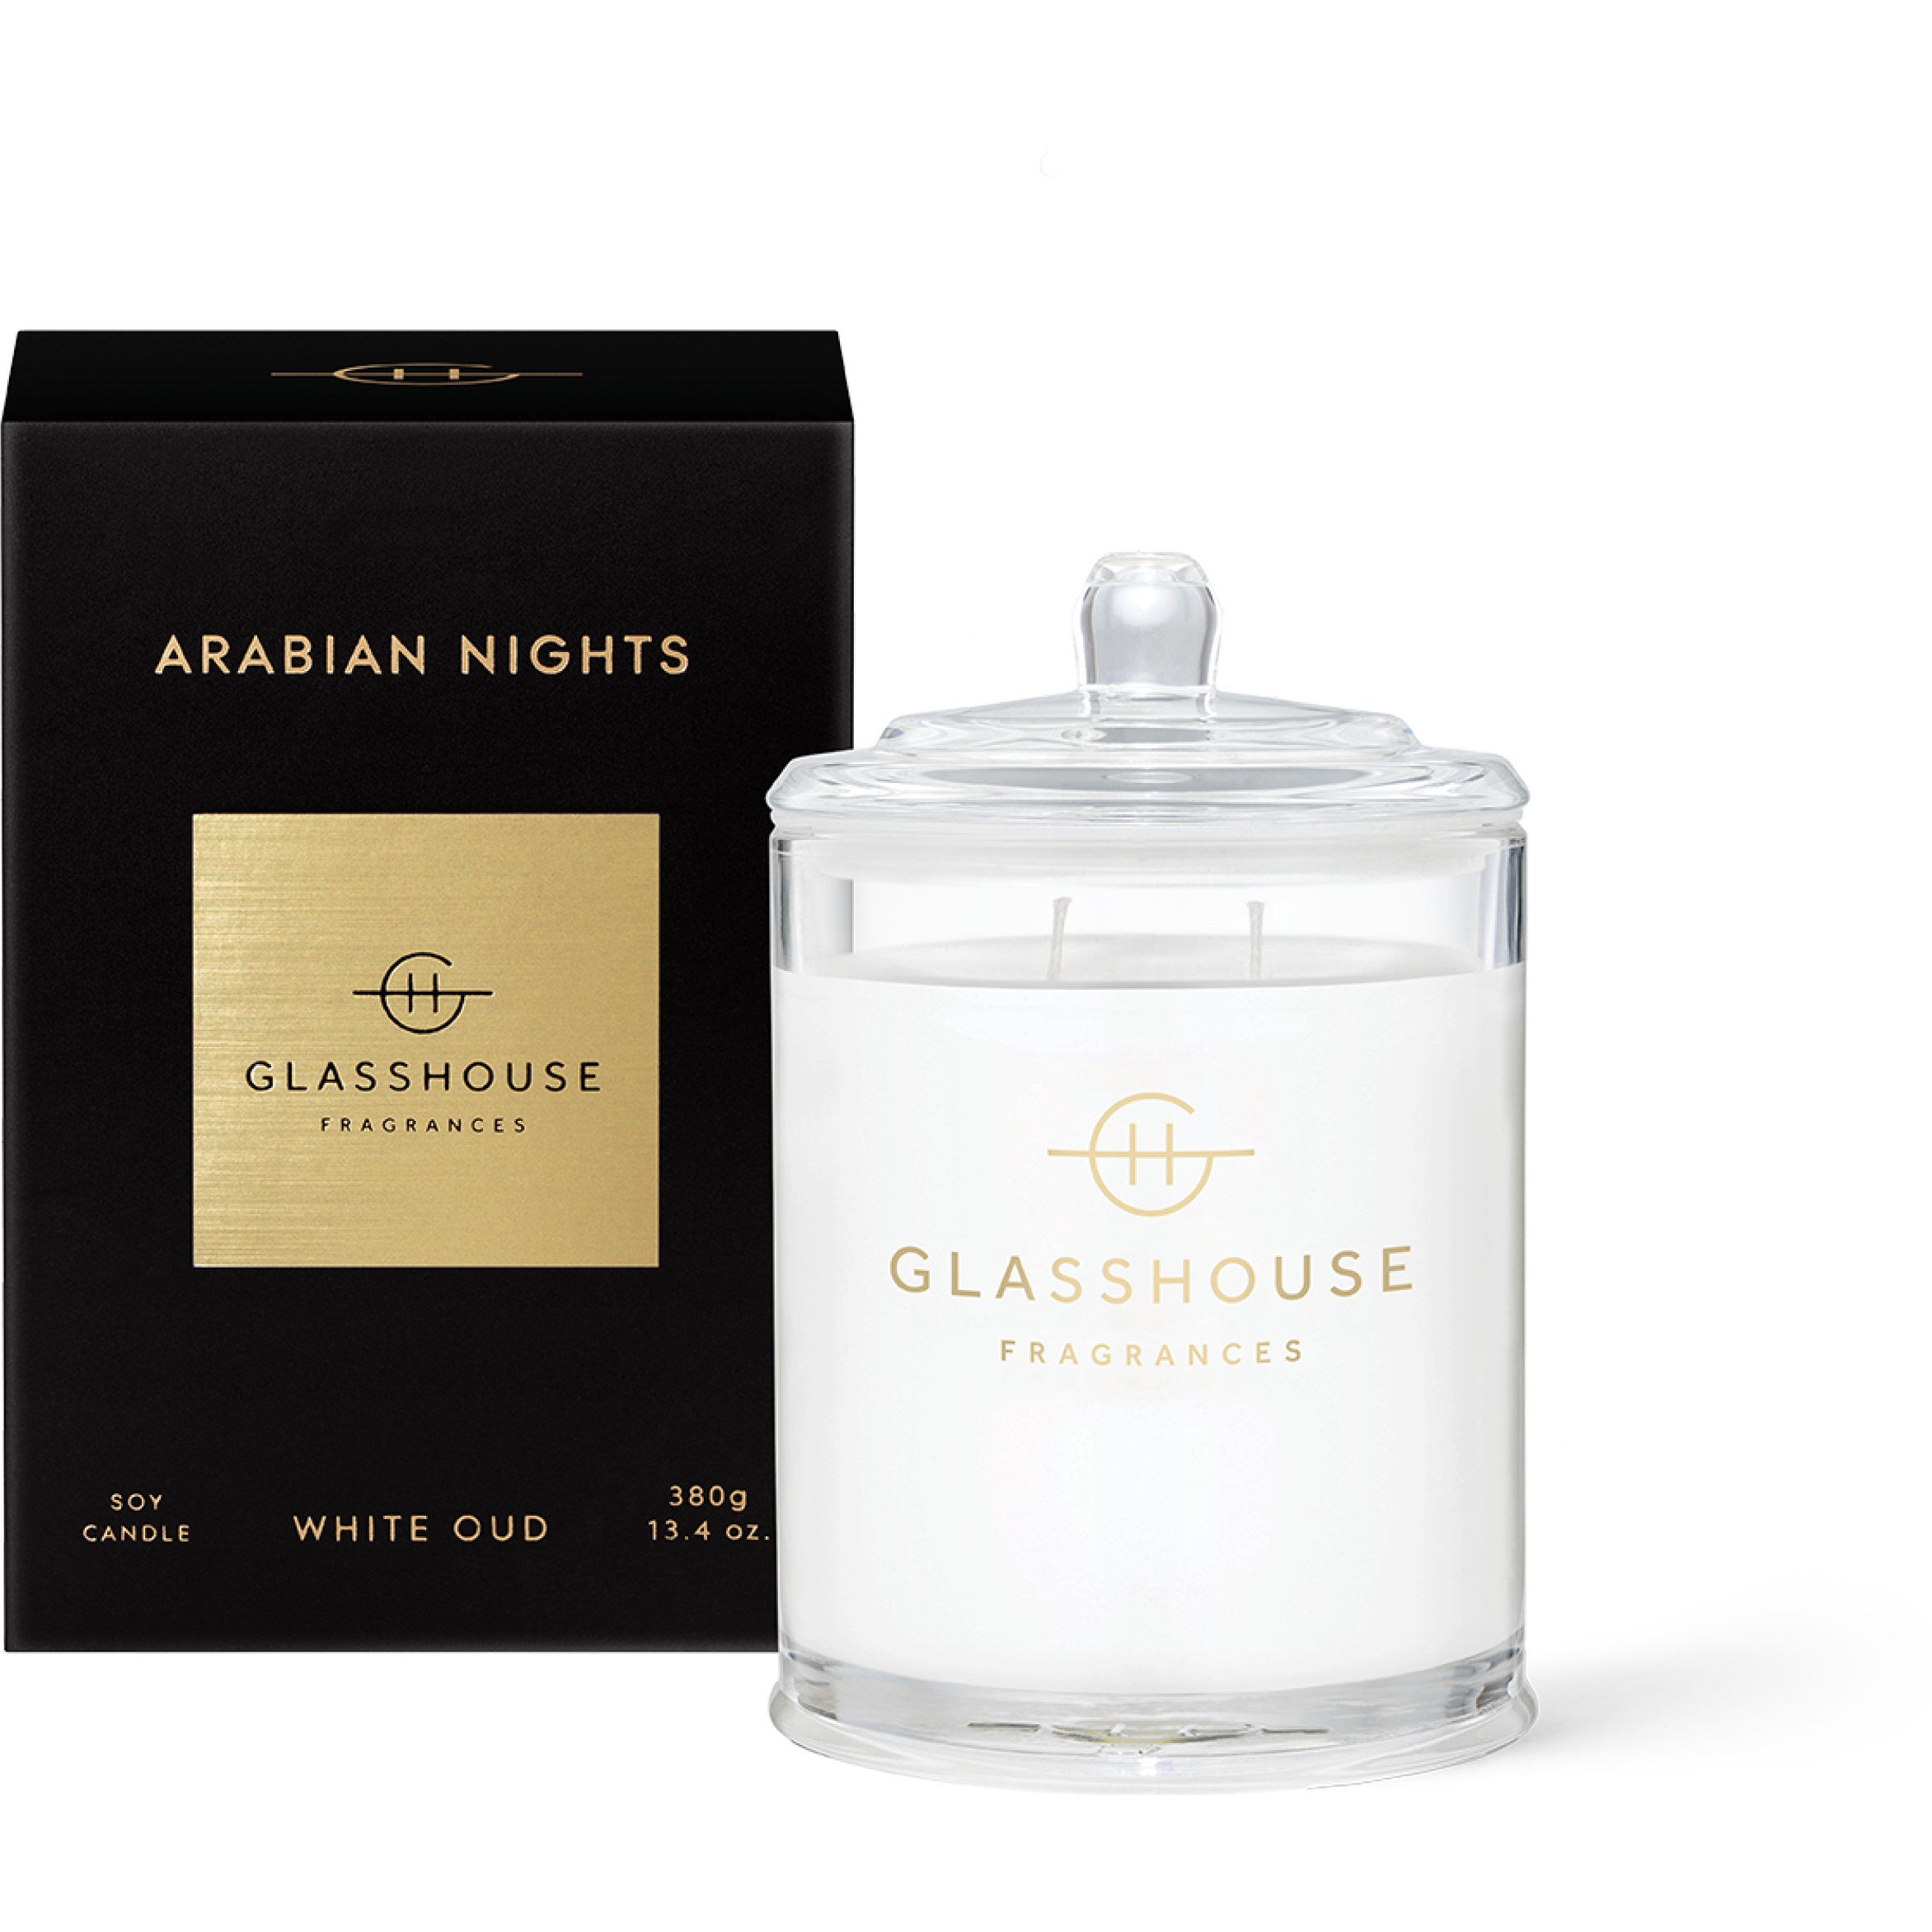 Glasshouse ARABIAN NIGHTS Candle